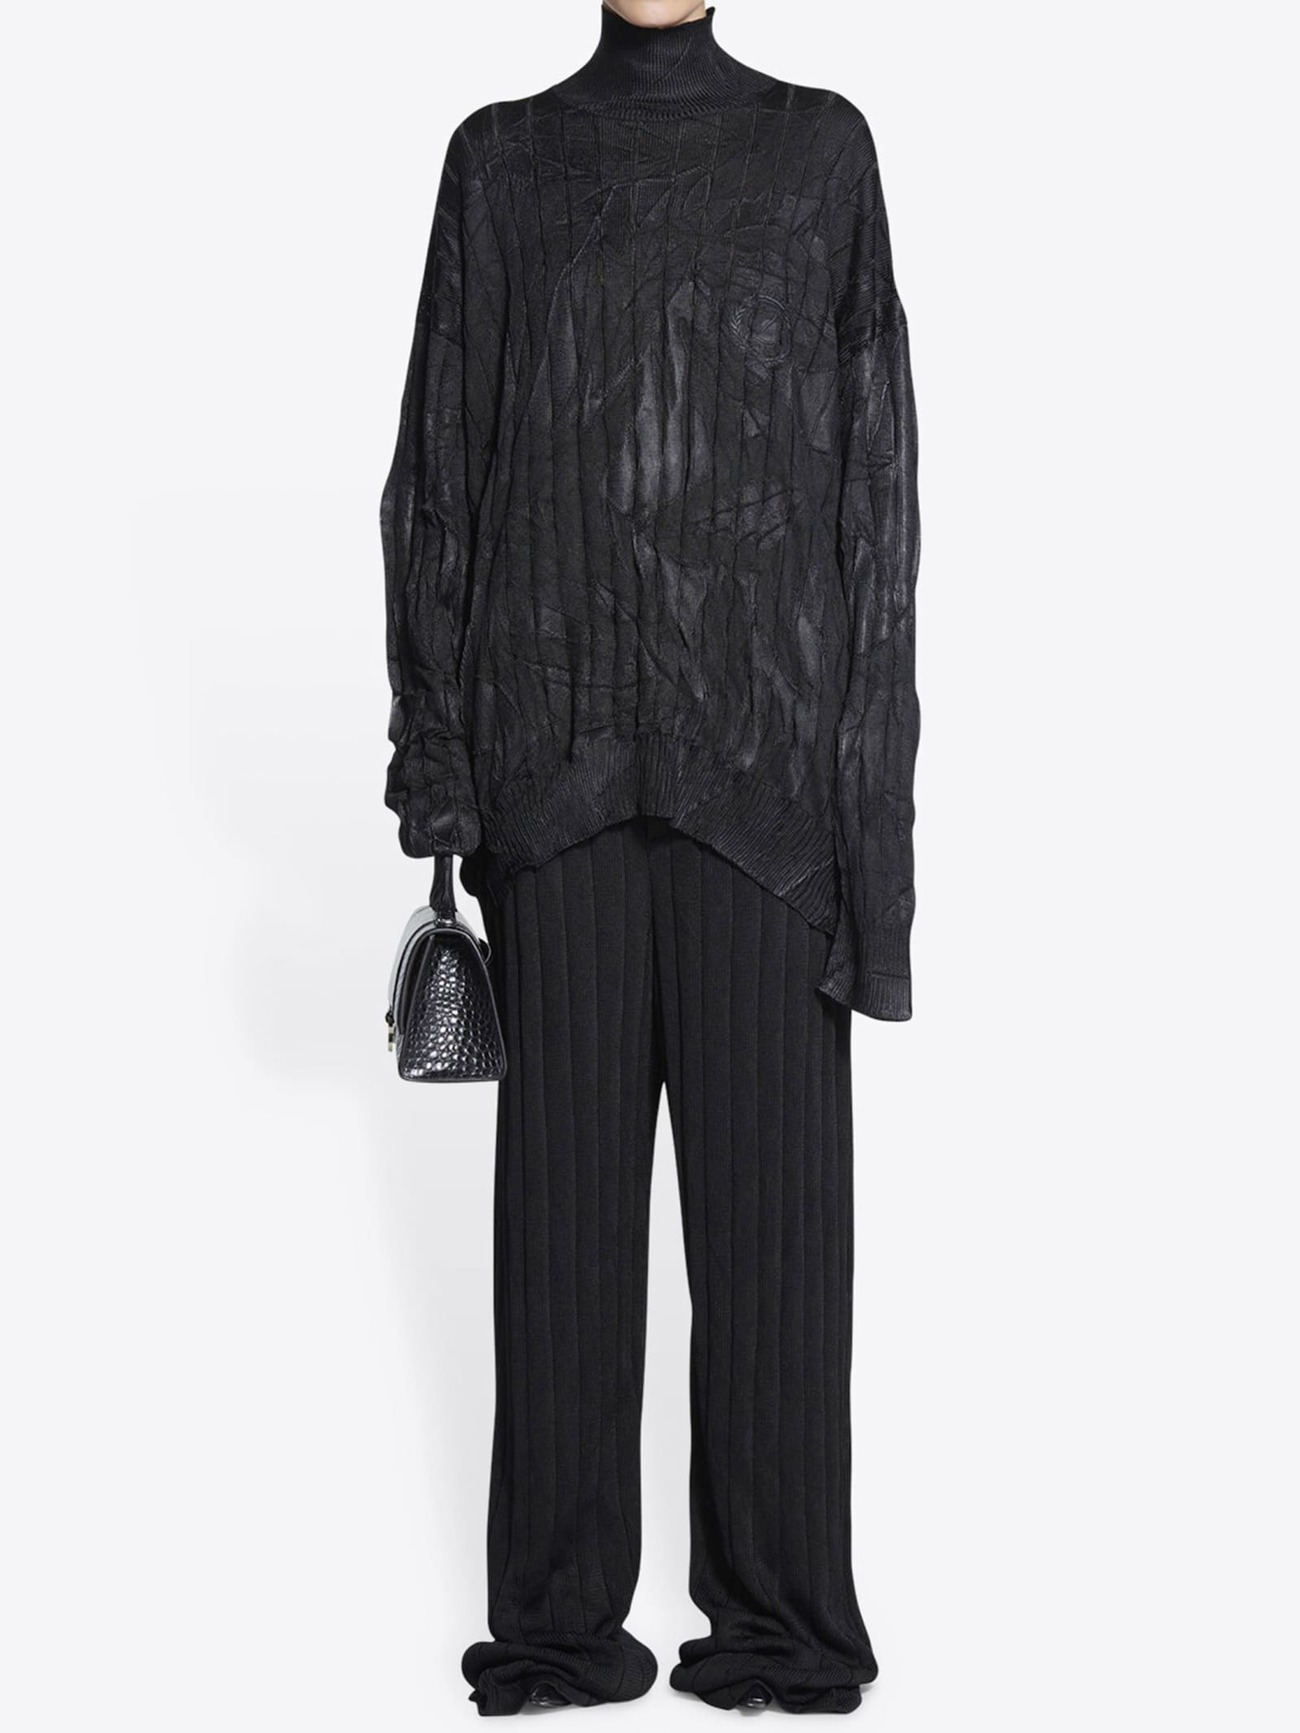 Balenciaga Creased Ribbed Pullover in black